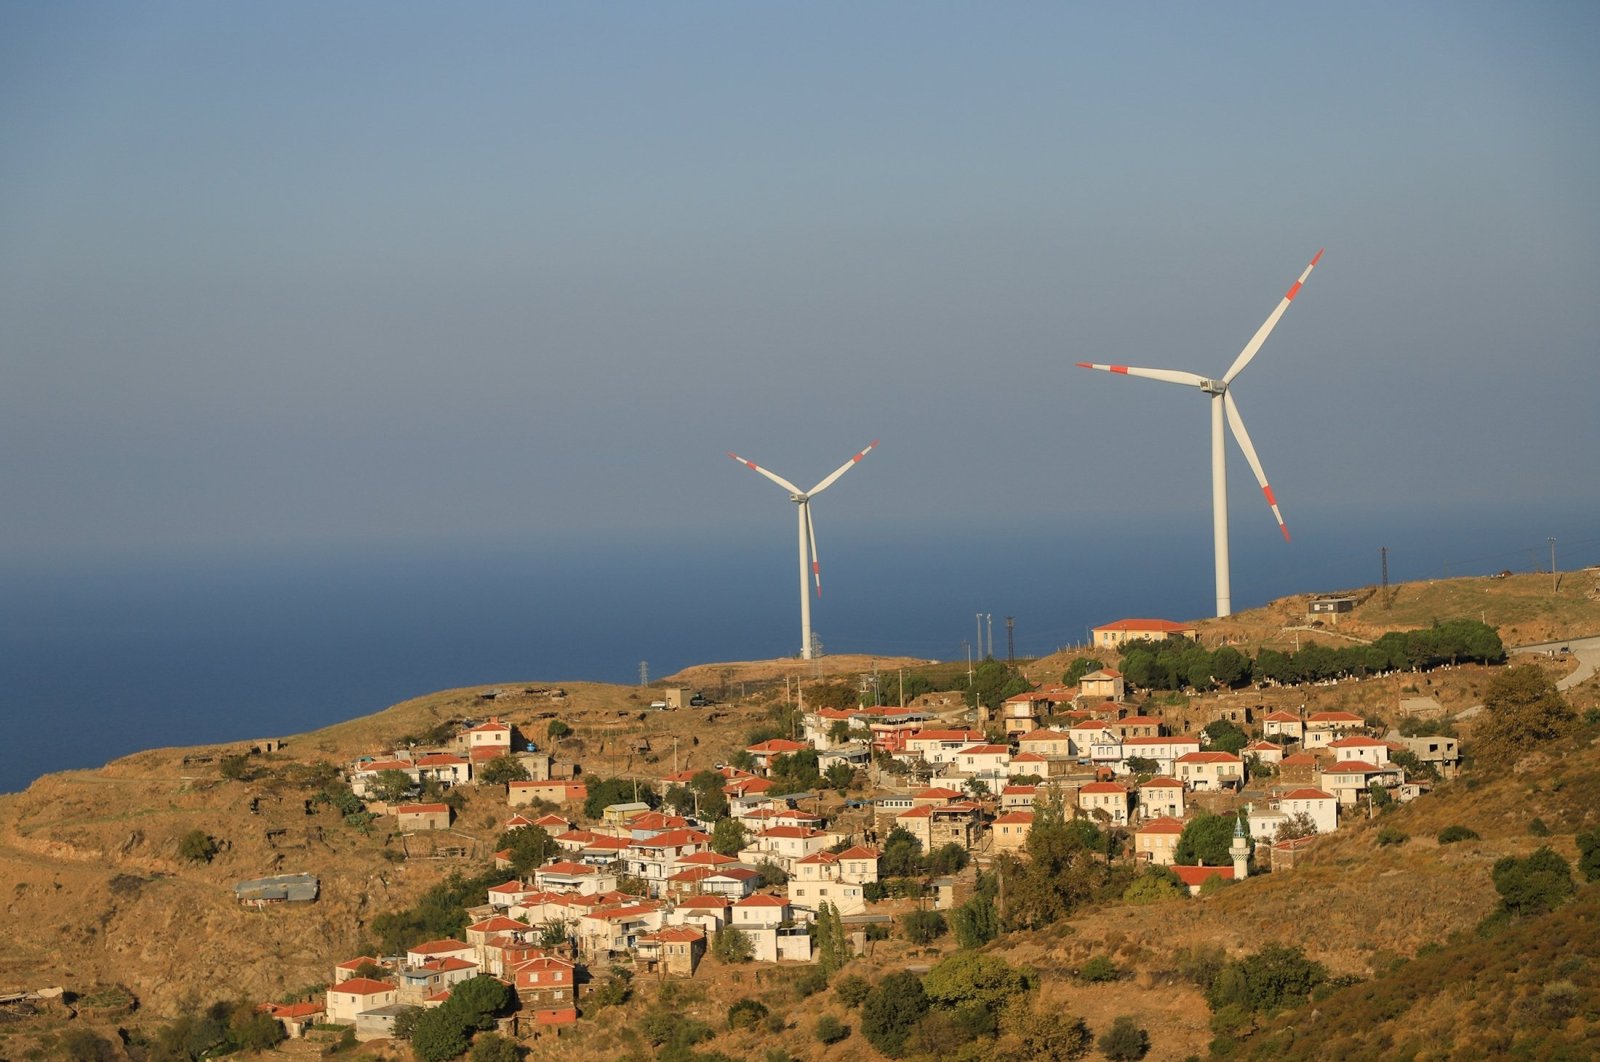 Wind turbines are seen in the Karaburun district of the Aegean province of Izmir, Türkiye, April 30, 2021. (Shutterstock Photo)
